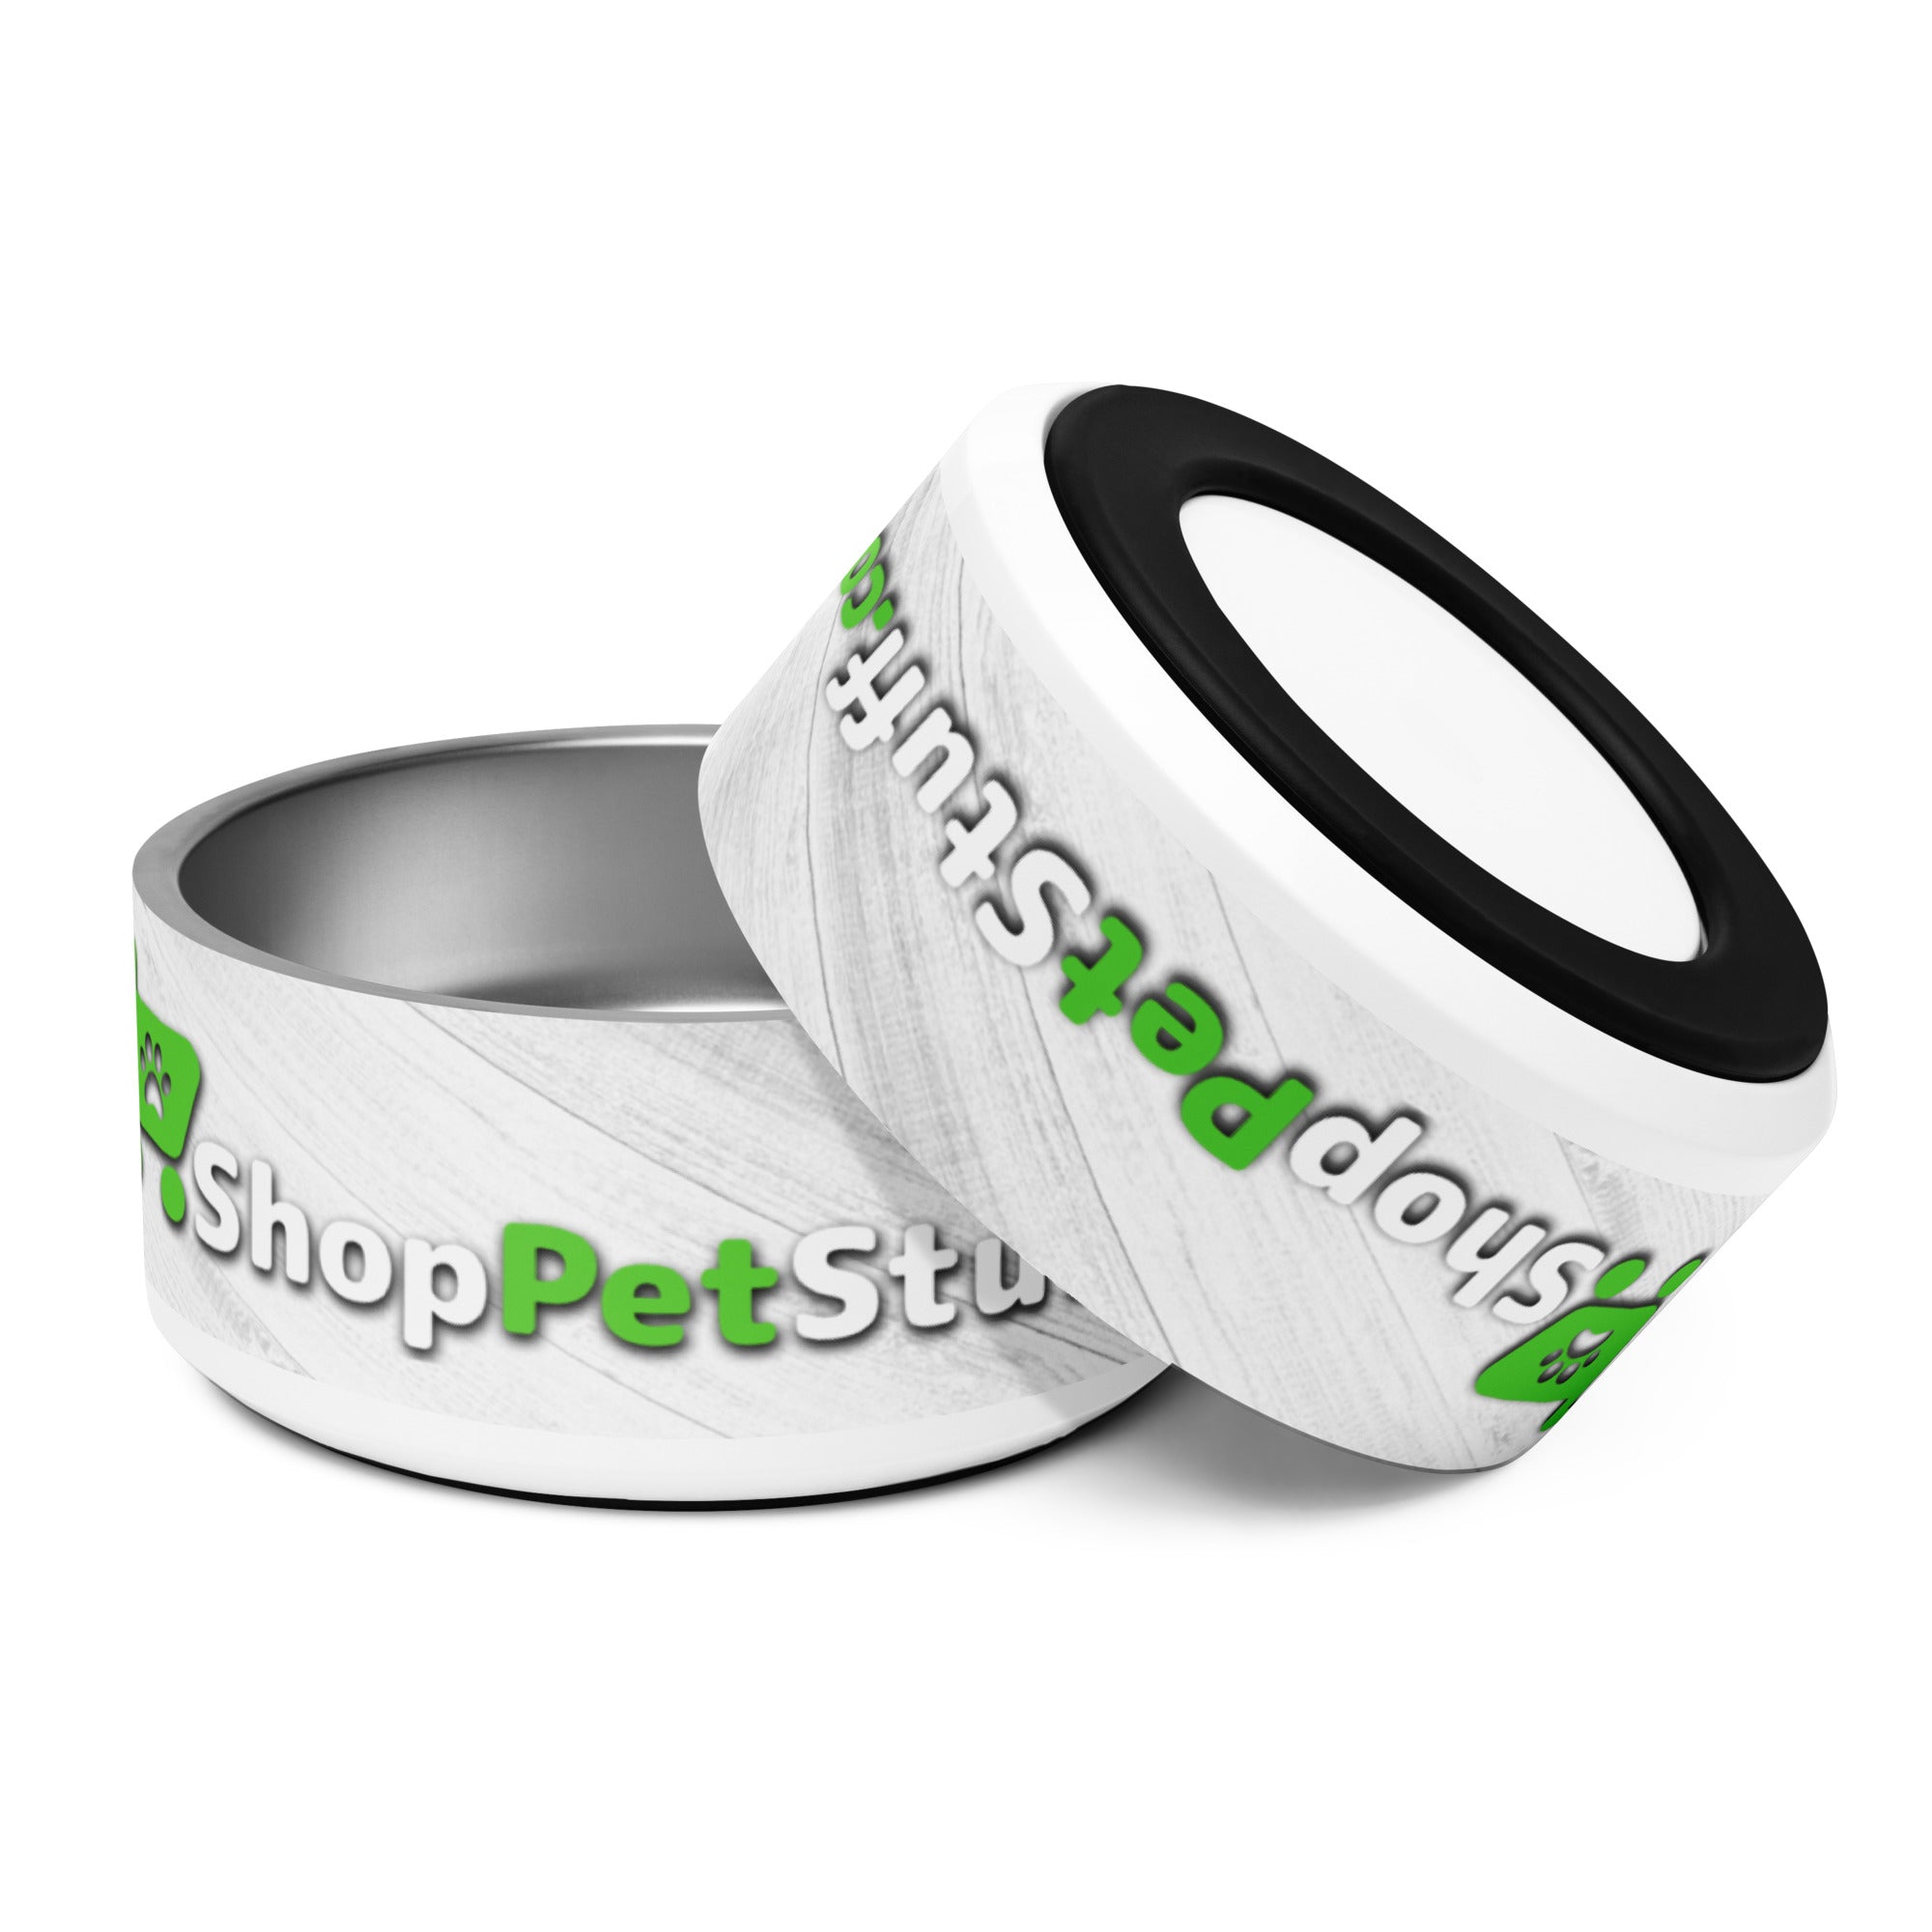 ShopPetStuff Pet Bowl